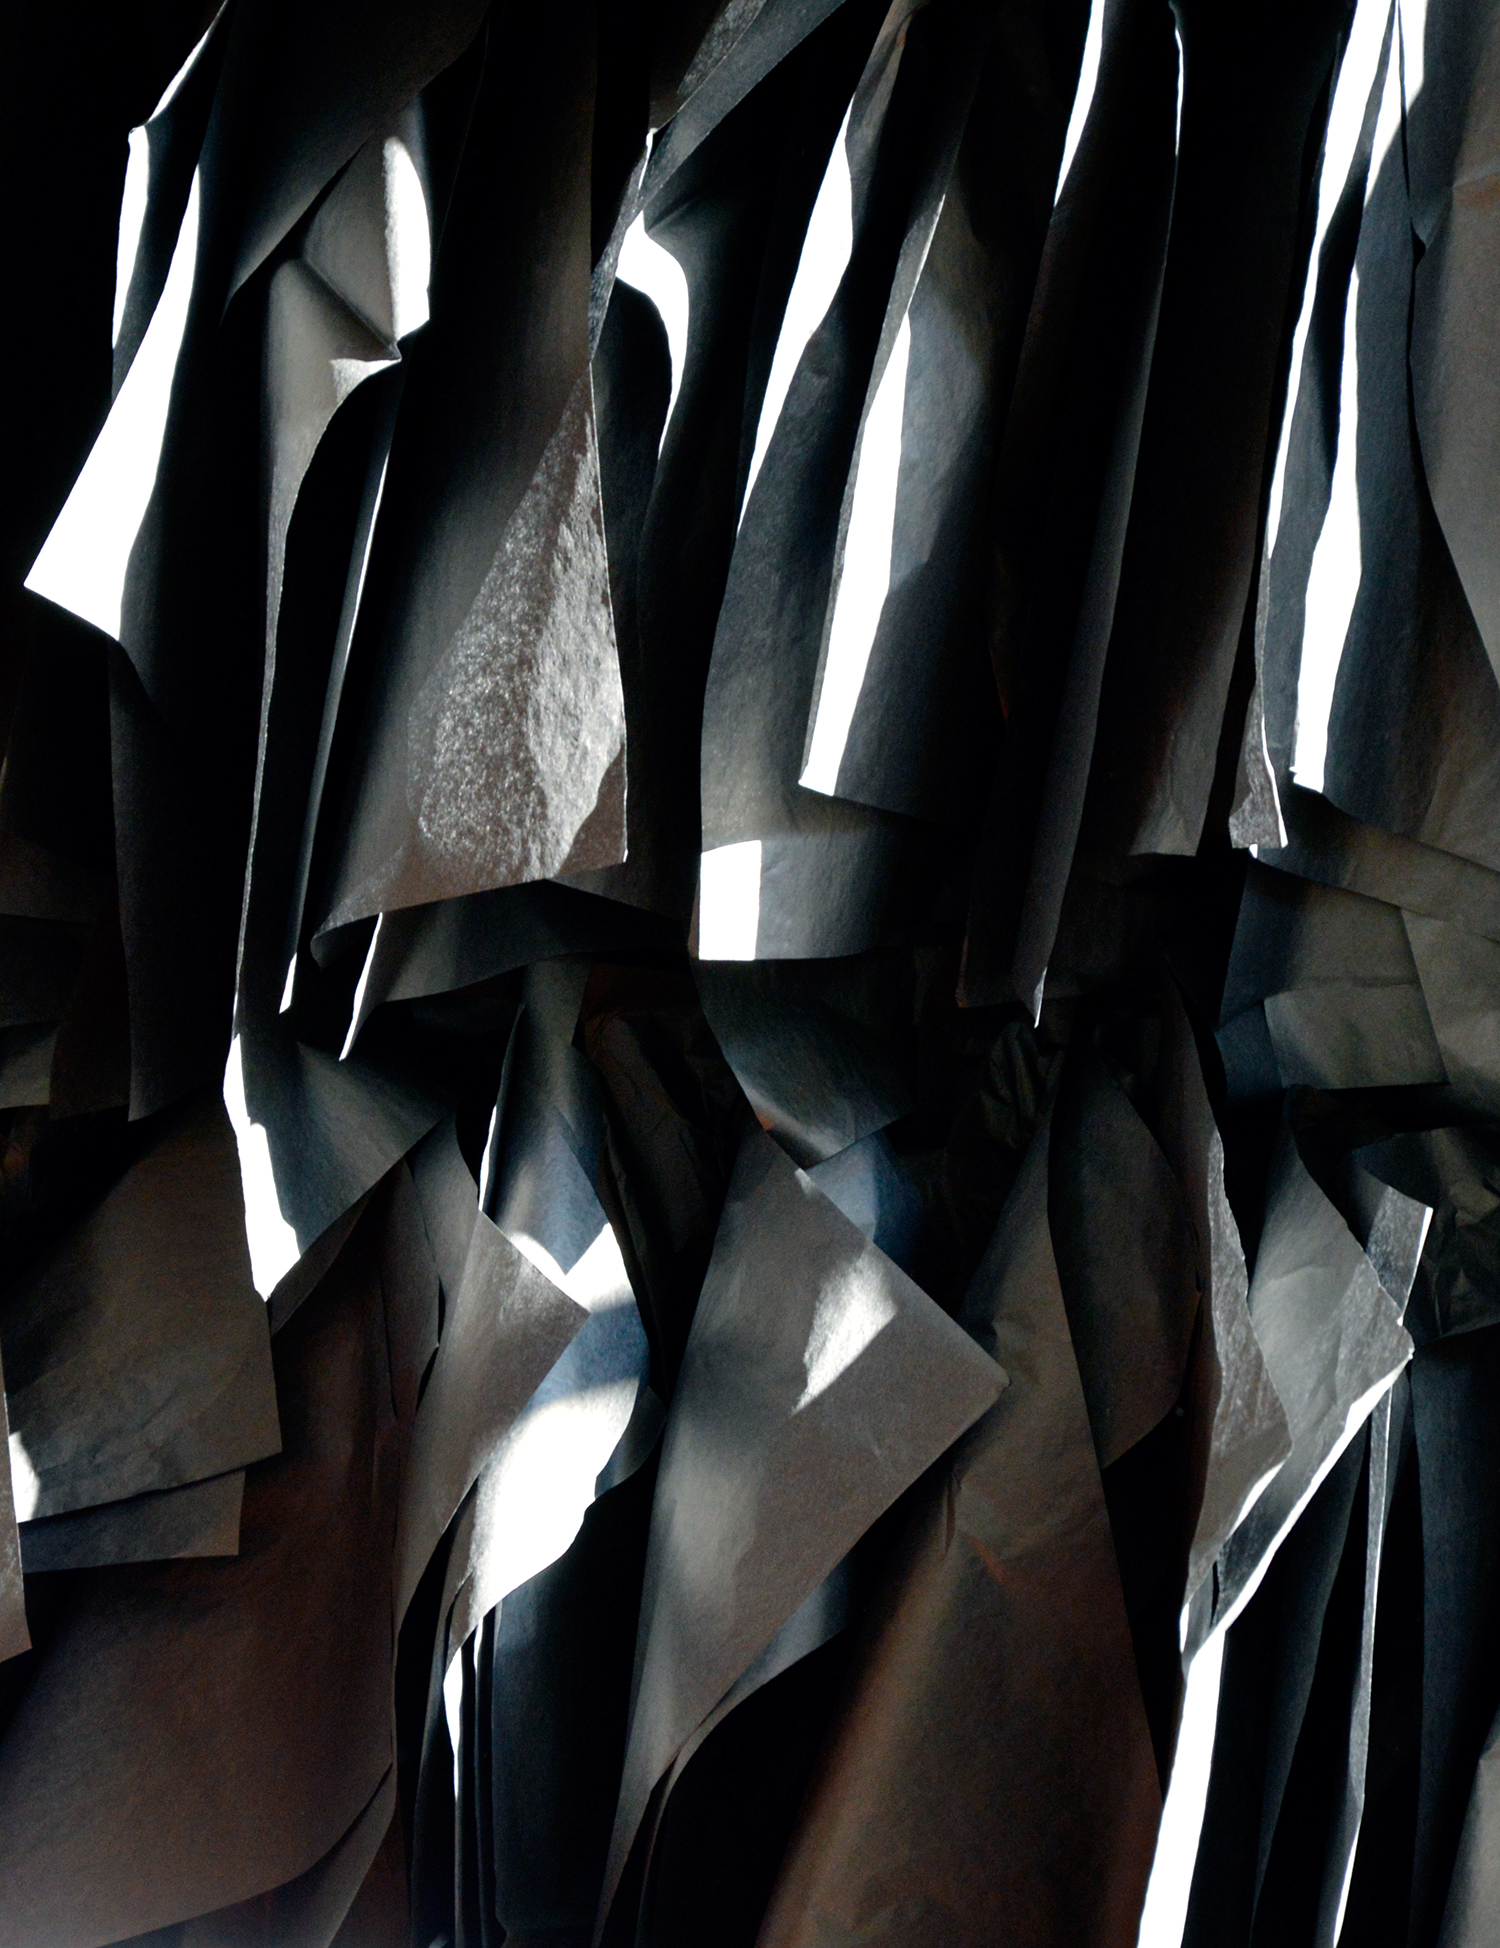 Joël Andrianomearisoa, 'Black Paper', detail, 2014